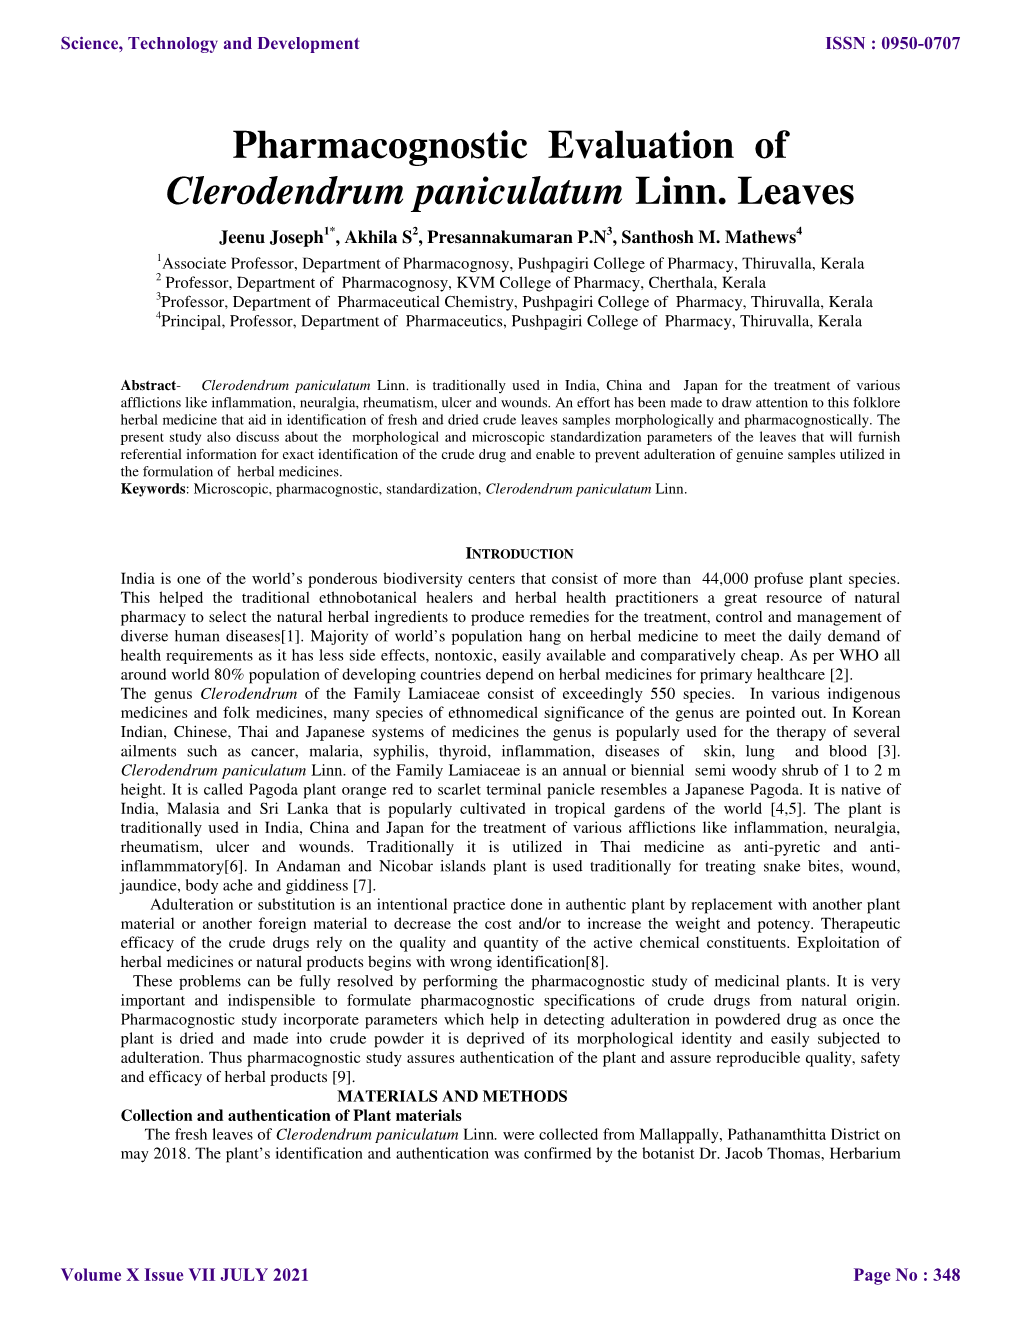 Pharmacognostic Evaluation of Clerodendrum Paniculatum Linn